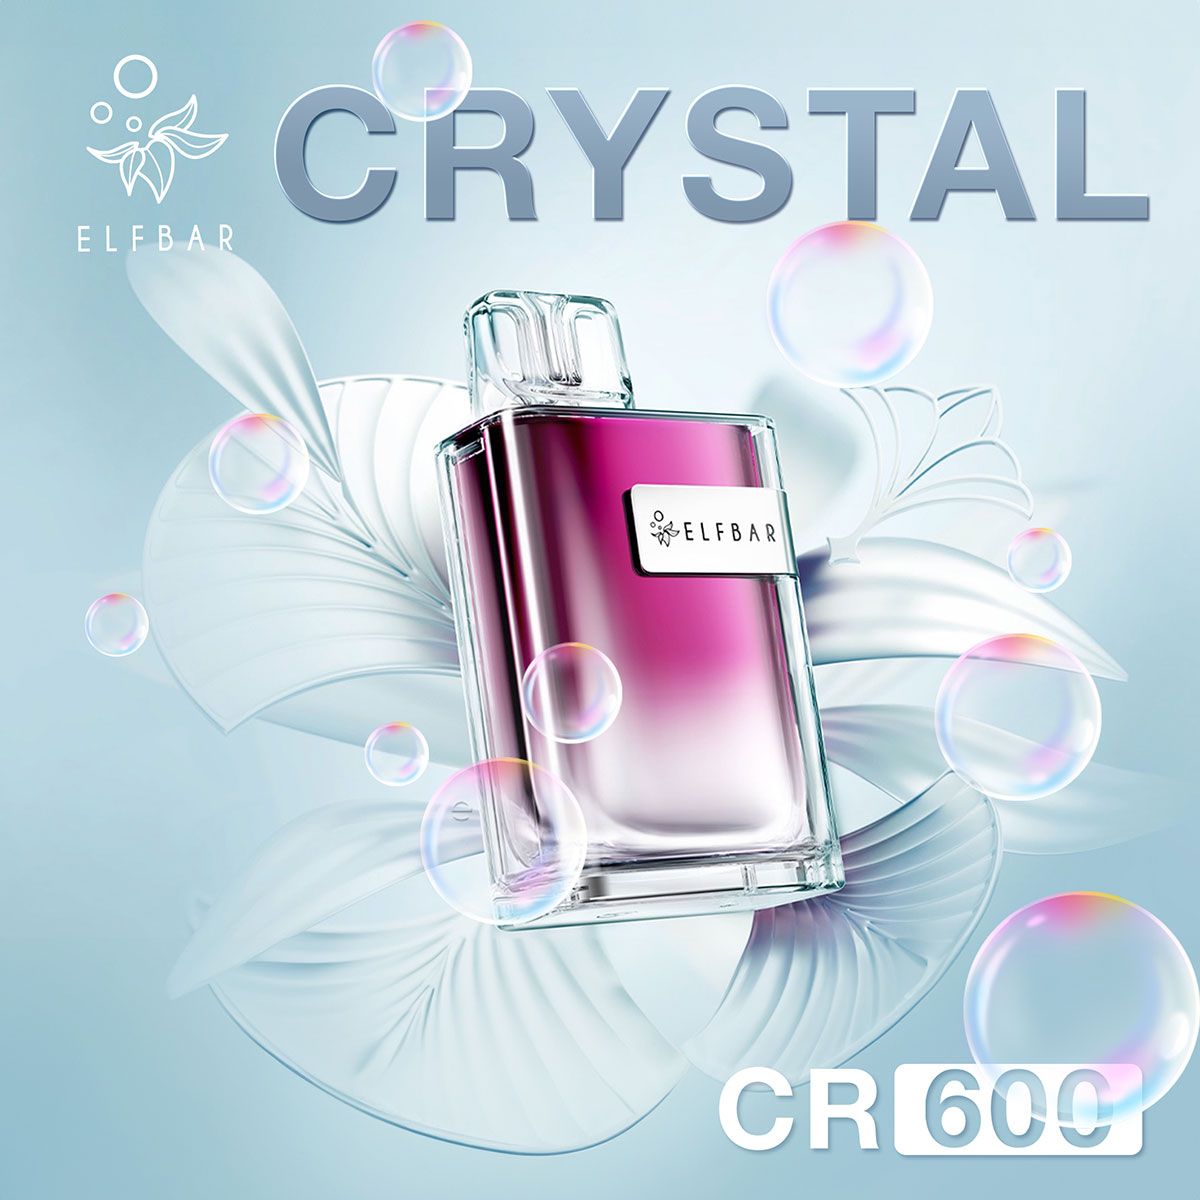 ELFBAR Crystal CR600 Blue Razz Lemonade Einweg E Zigarette 20mg/ml 